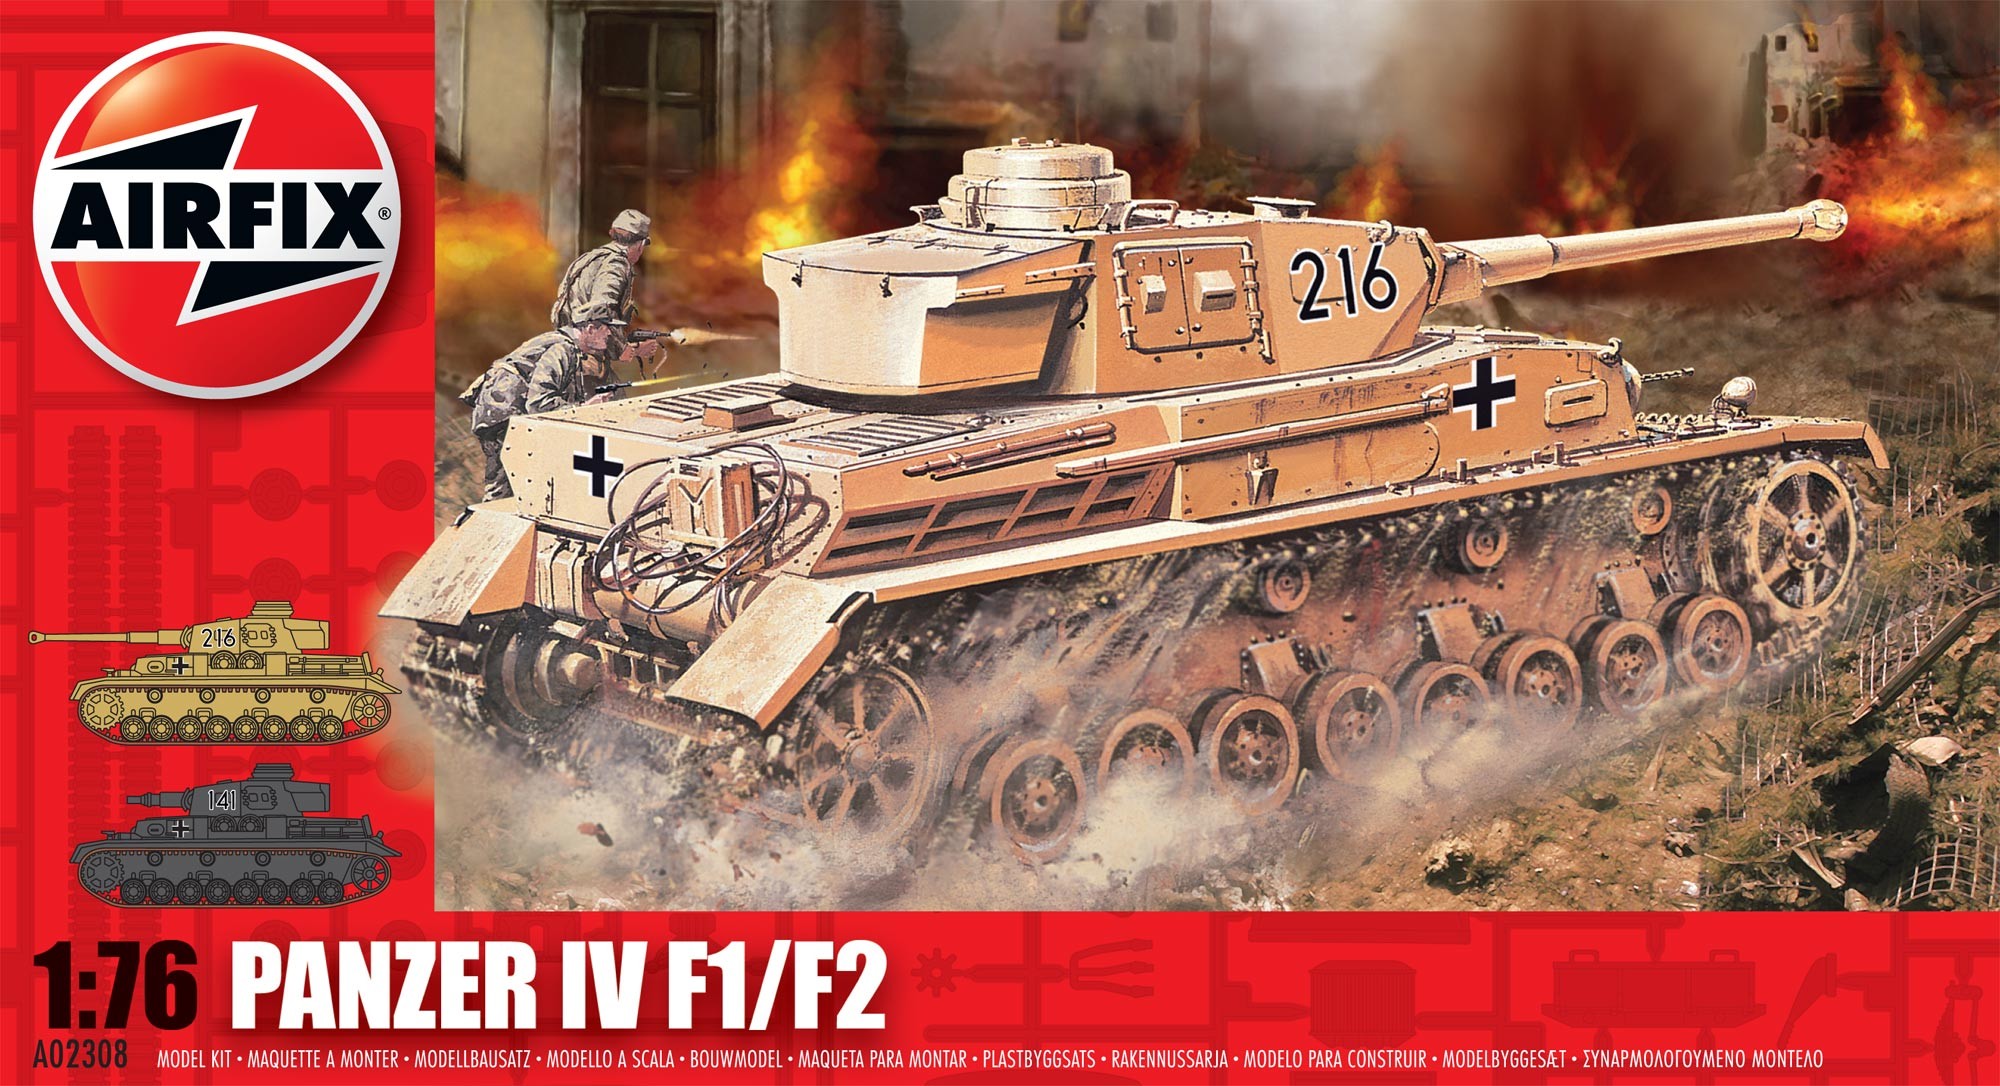 Airfix Panzer IV in 1:76 bouwpakket